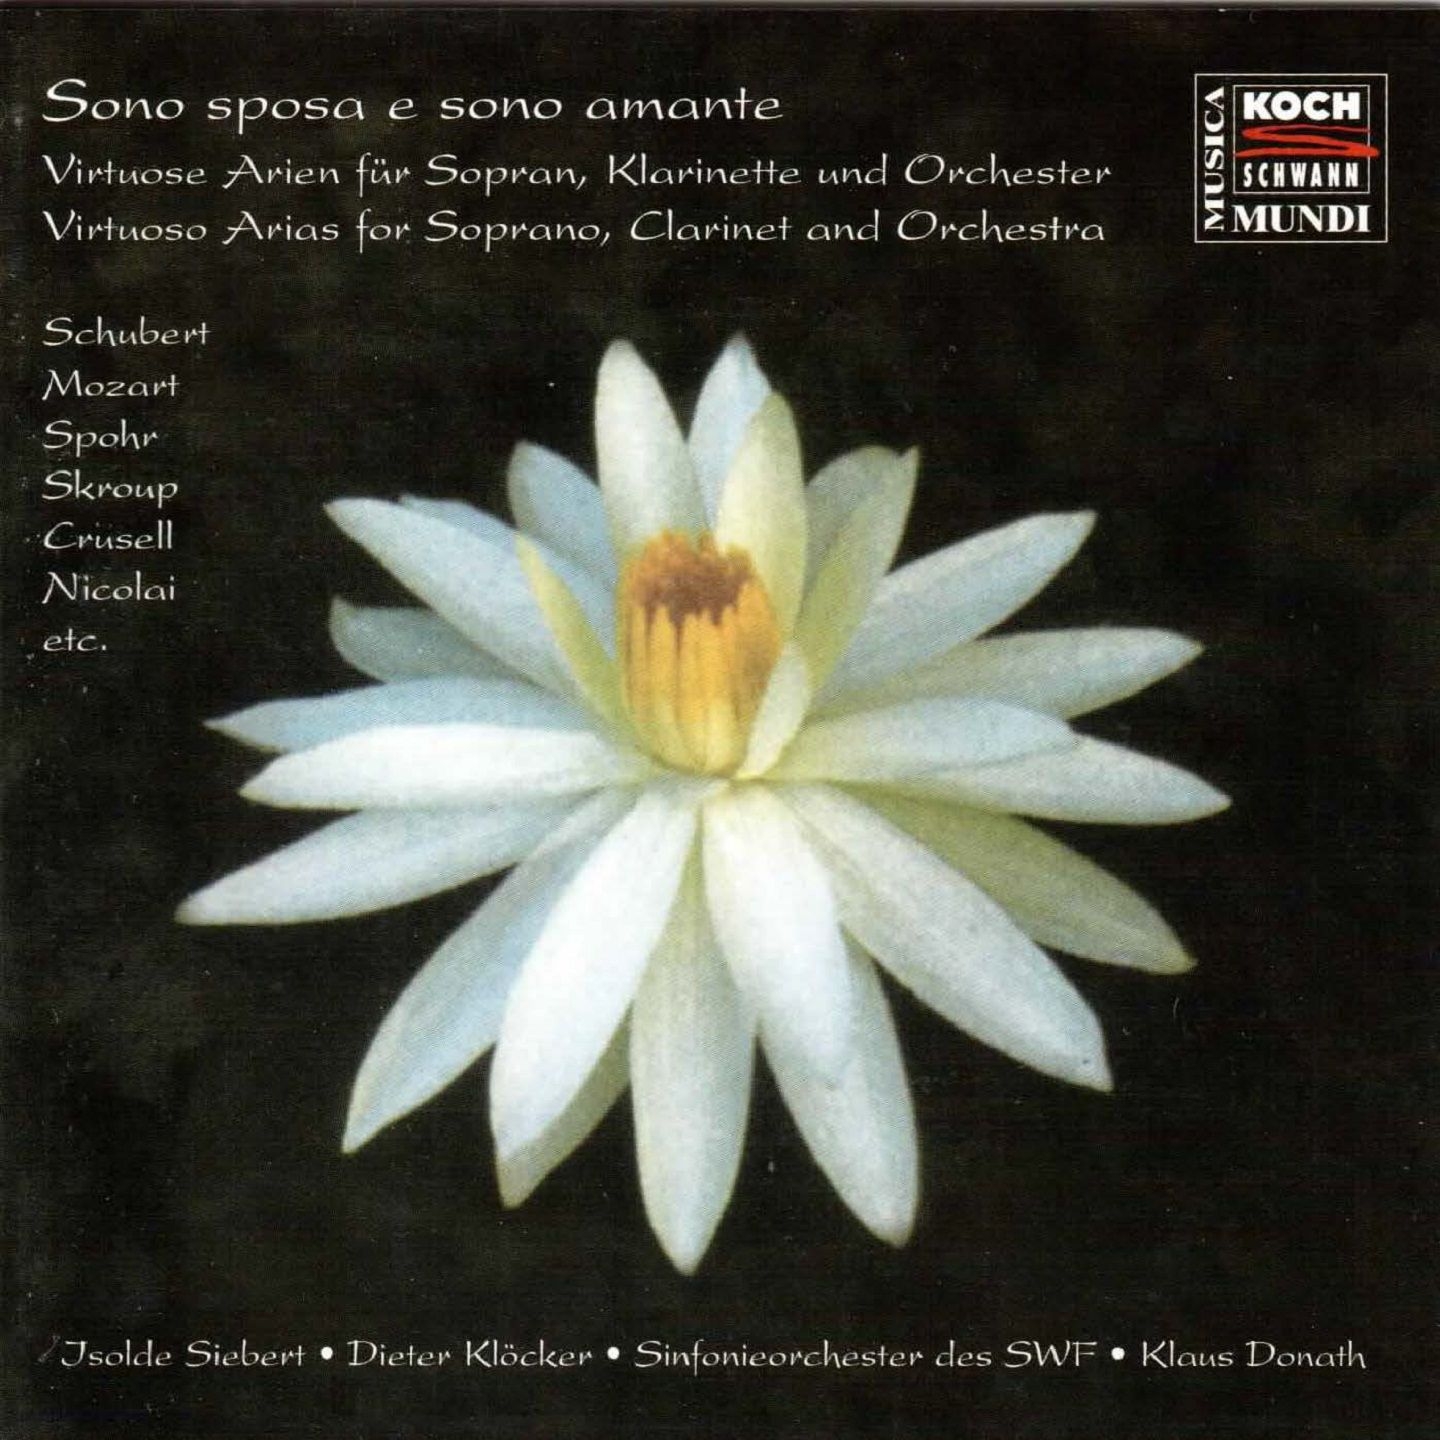 Variazioni Concertanti from Rosmonda d'Inghilterra, Op. 26